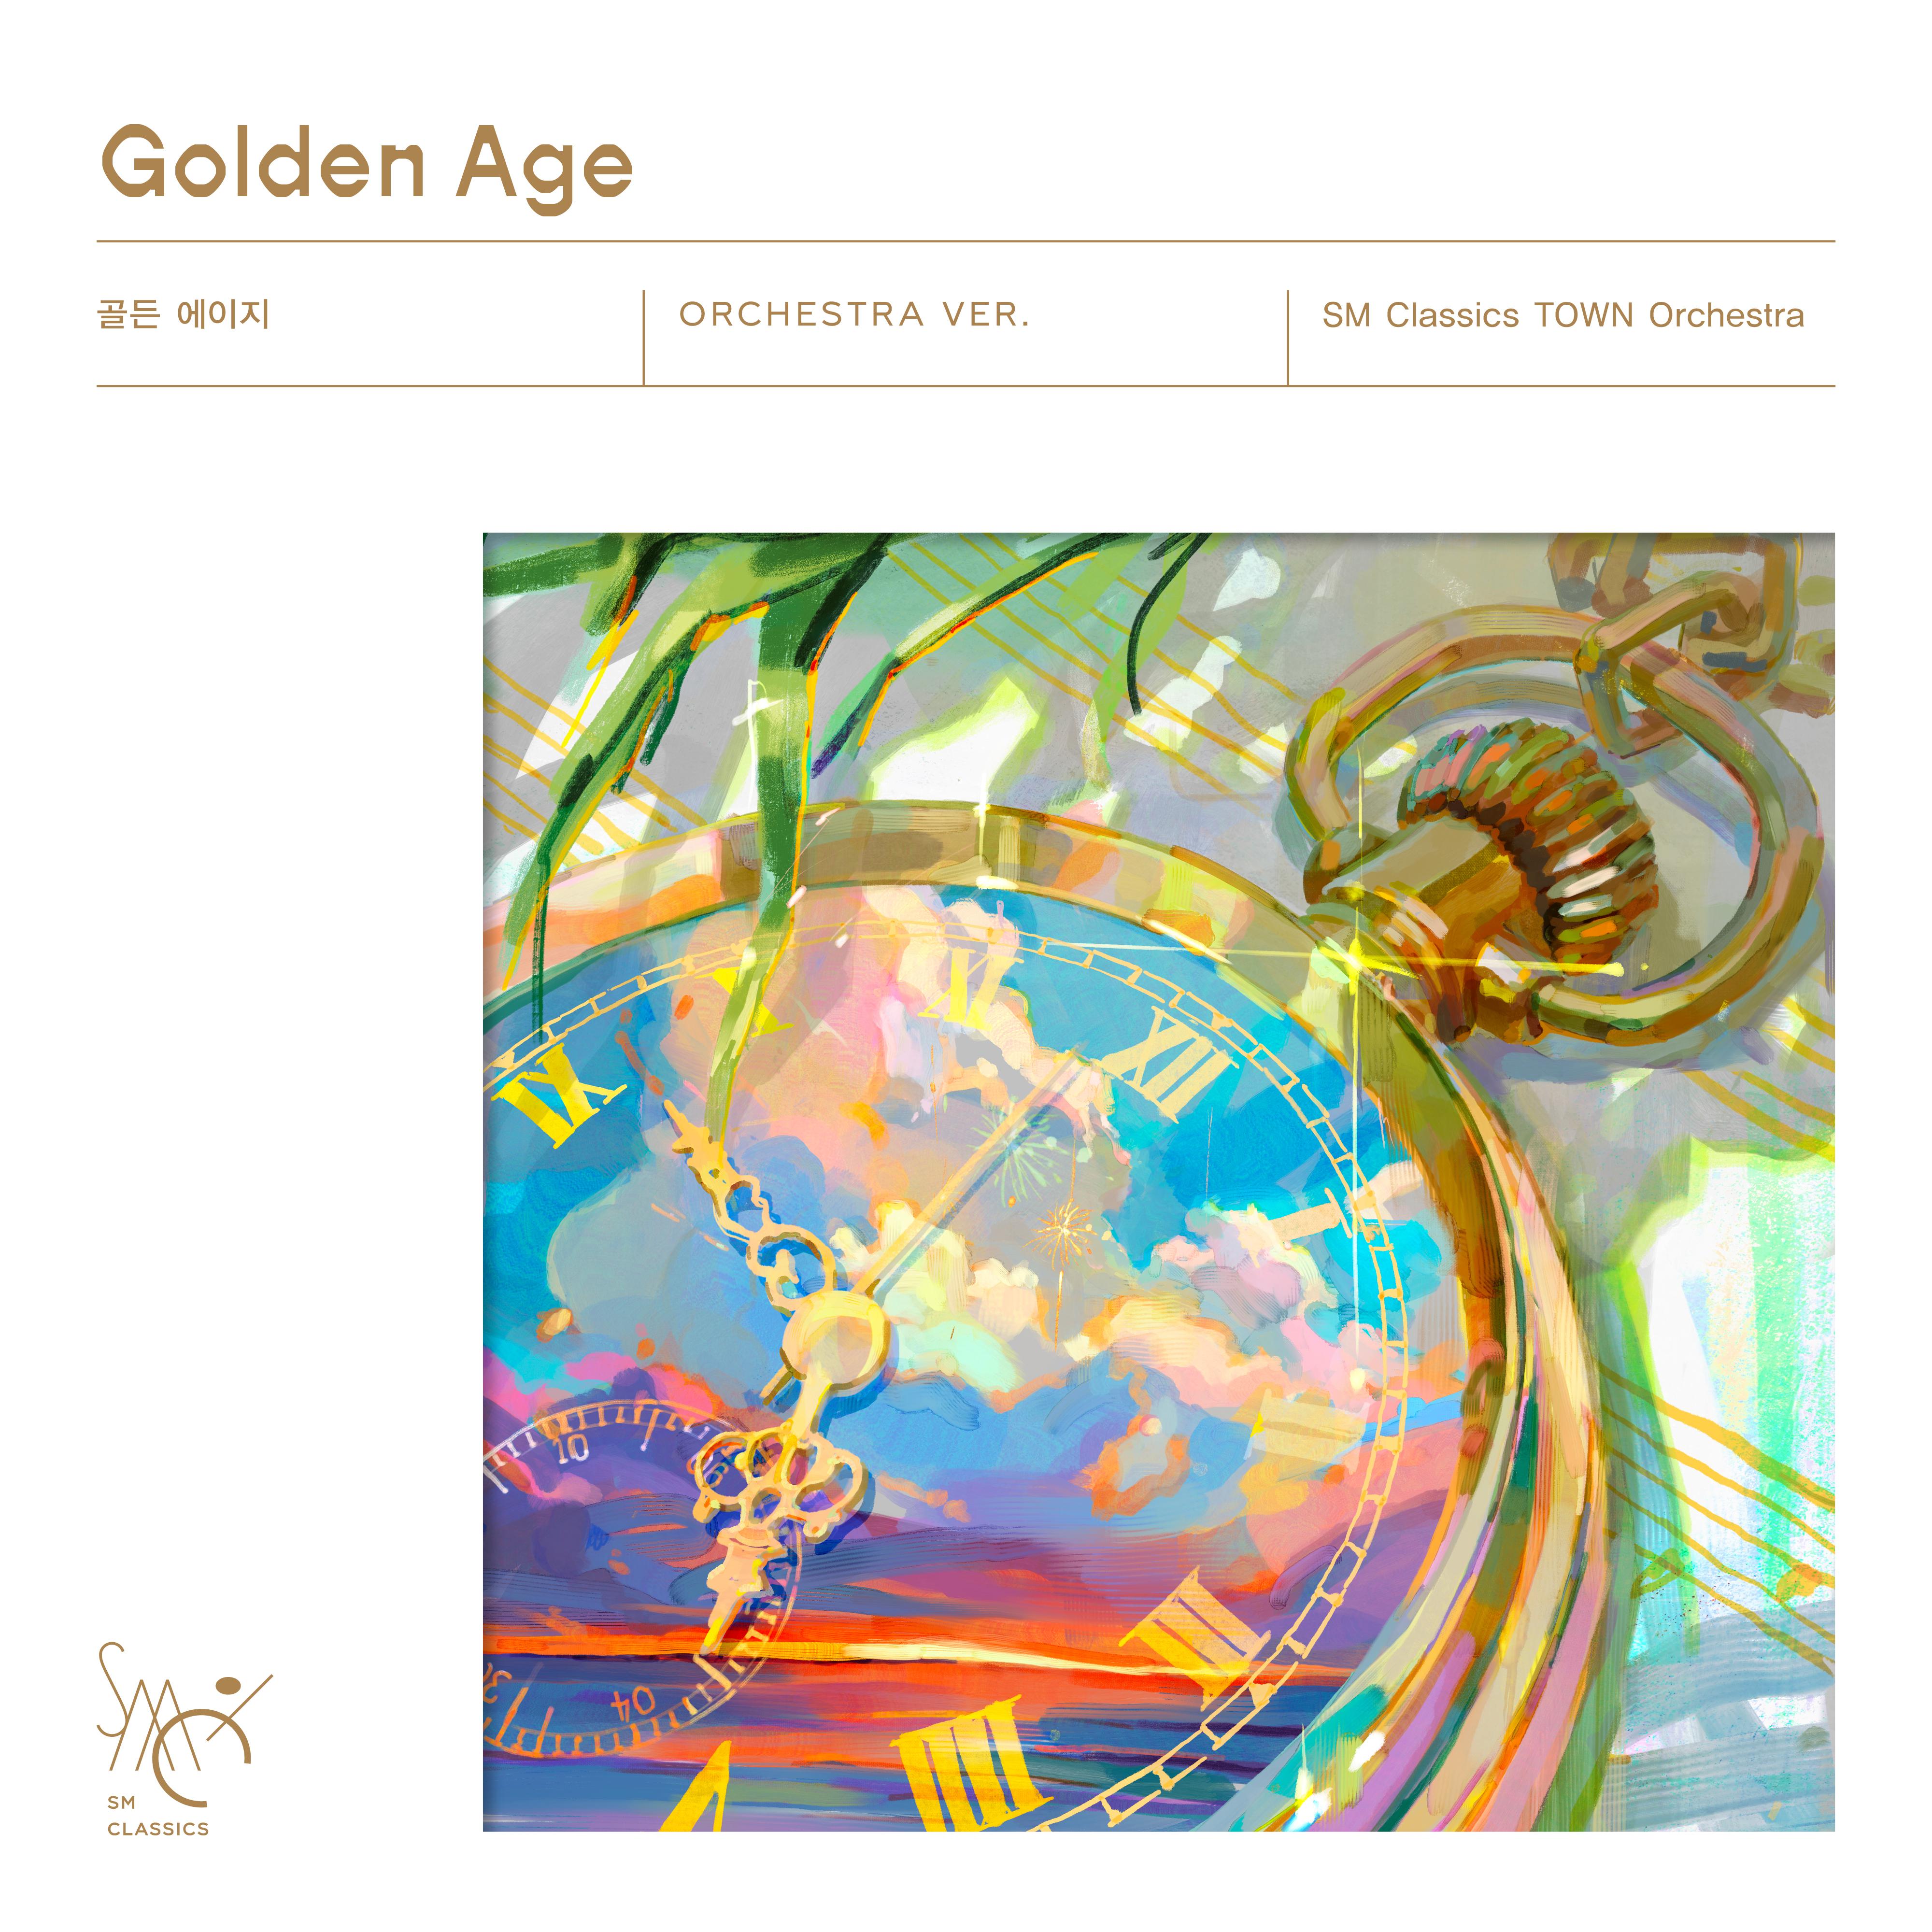 SM Classics TOWN Orchestra - Golden Age (Orchestra Ver.)